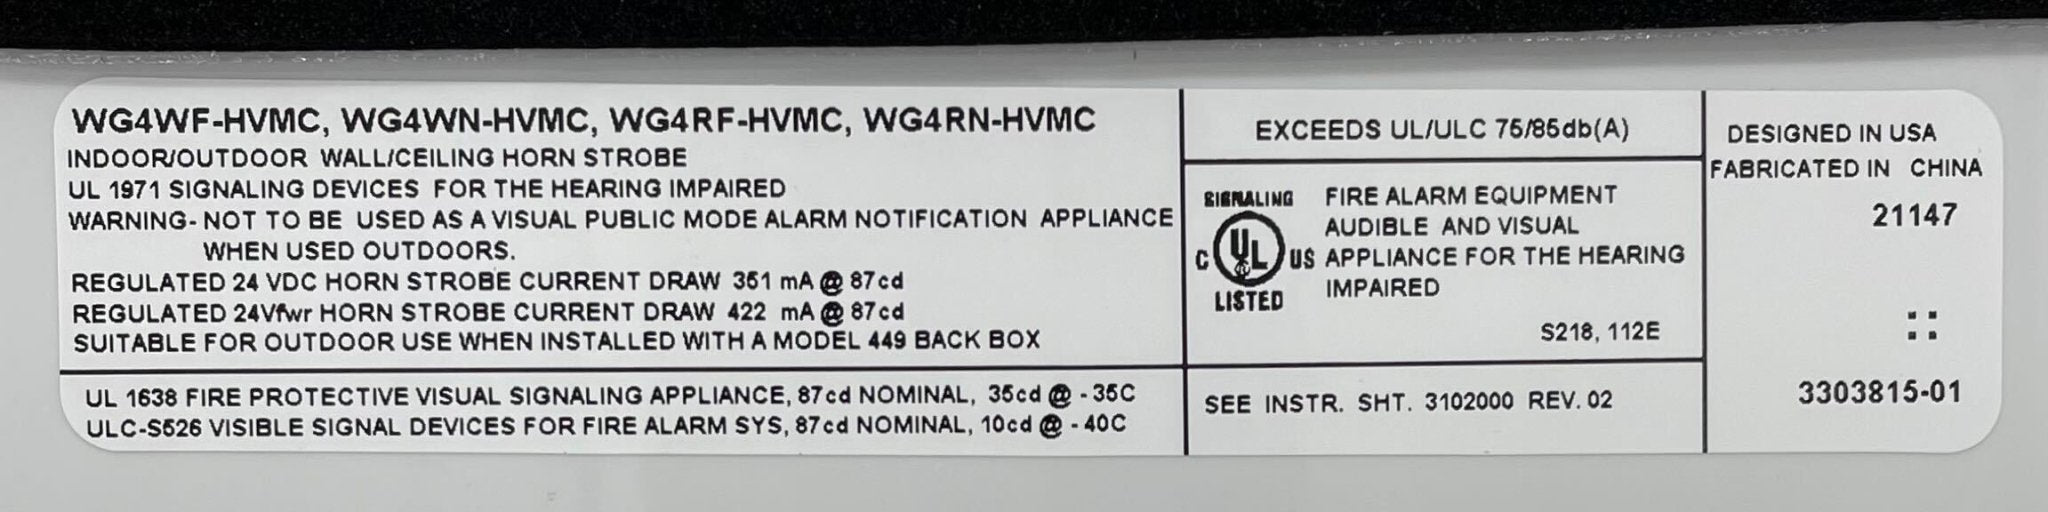 Edwards WG4WN-HVMC - The Fire Alarm Supplier